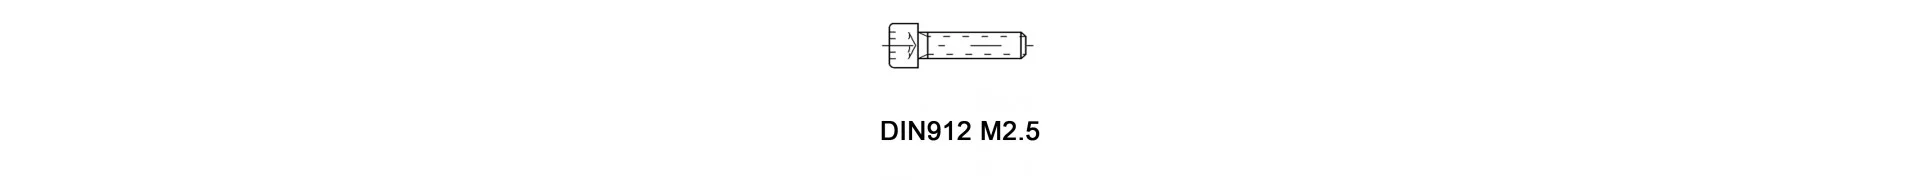 DIN912 M2.5